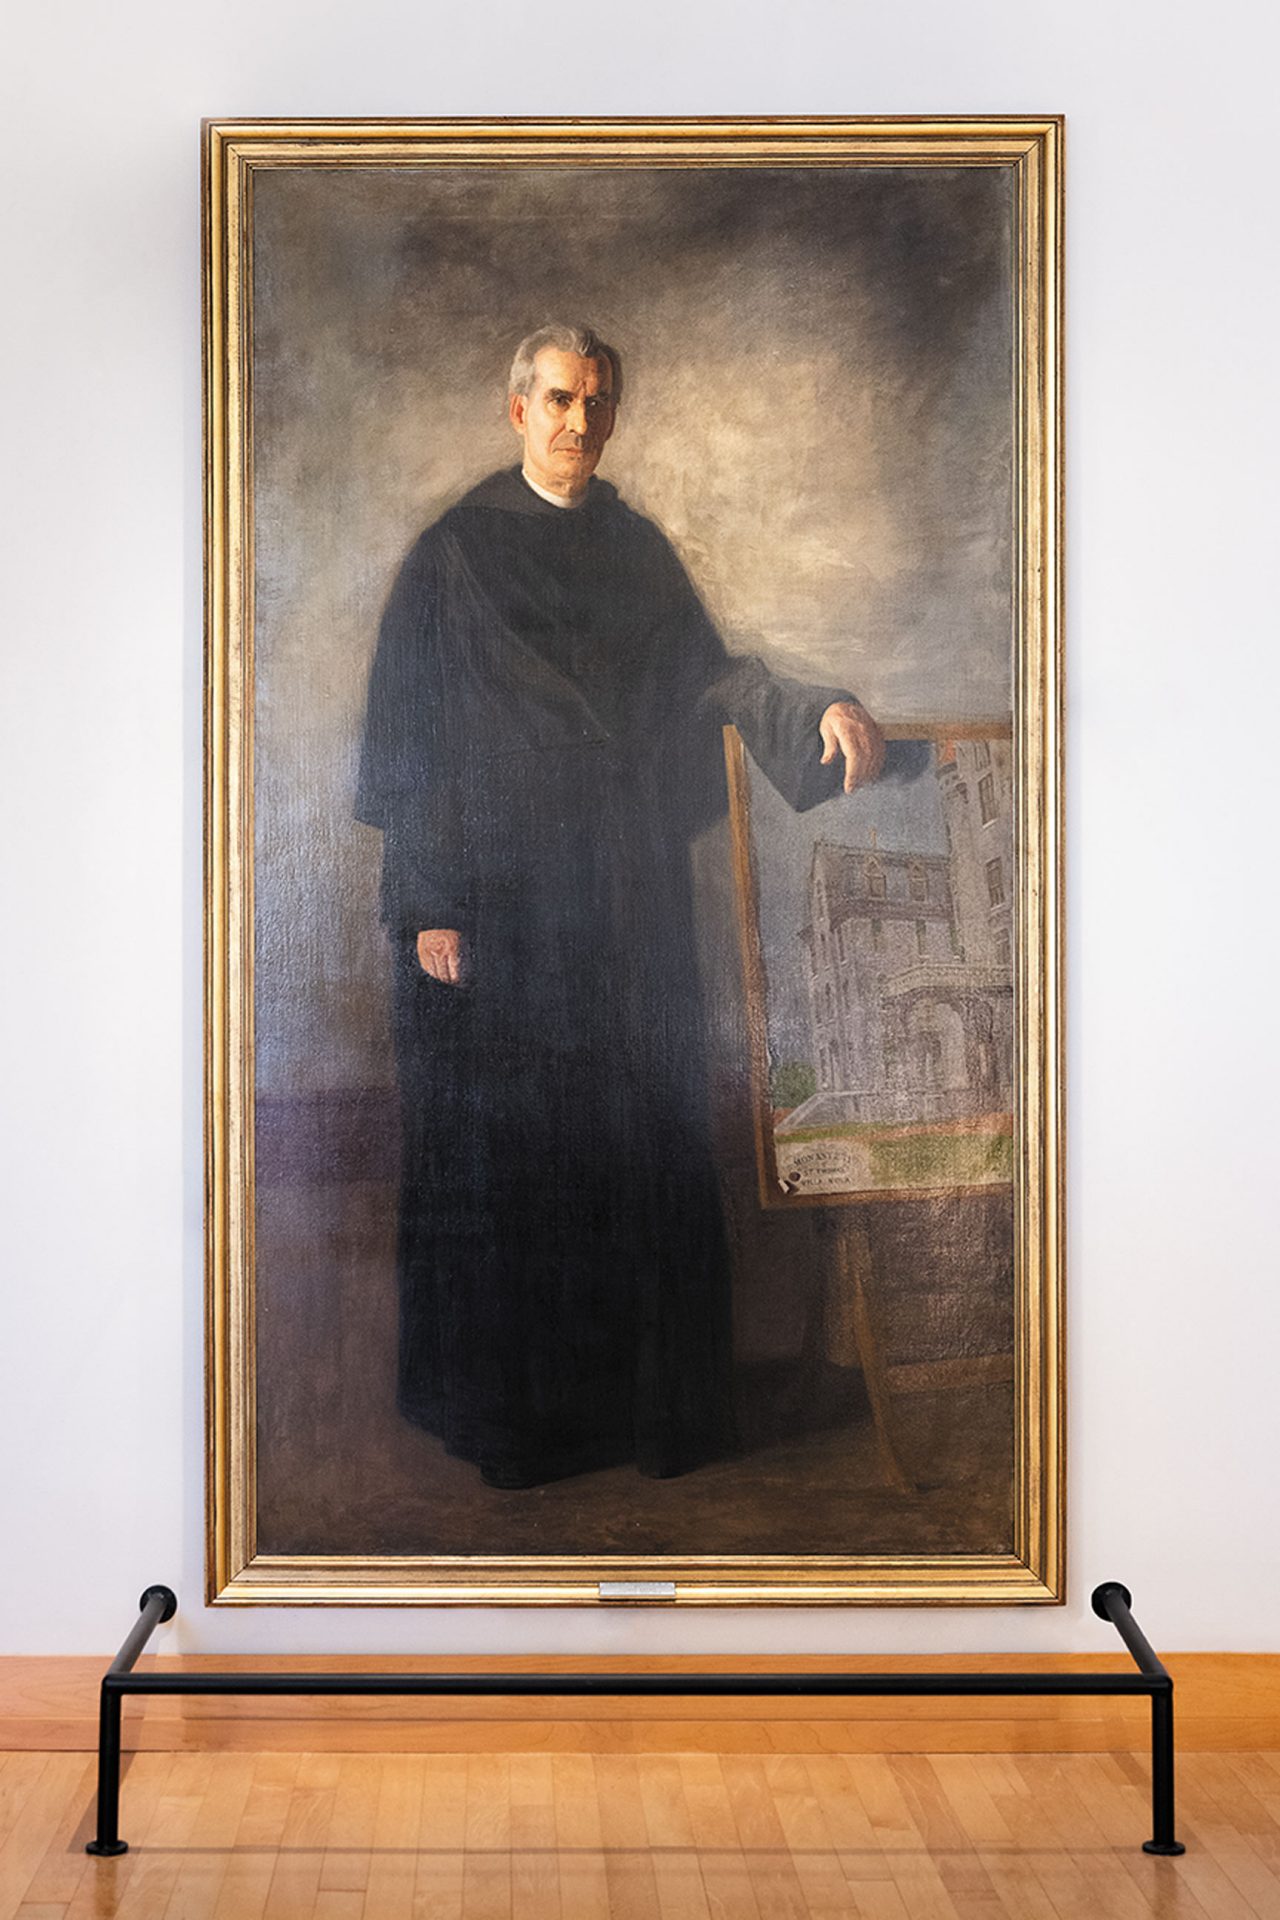 painted portrait of the Rev. John J. Fedigan